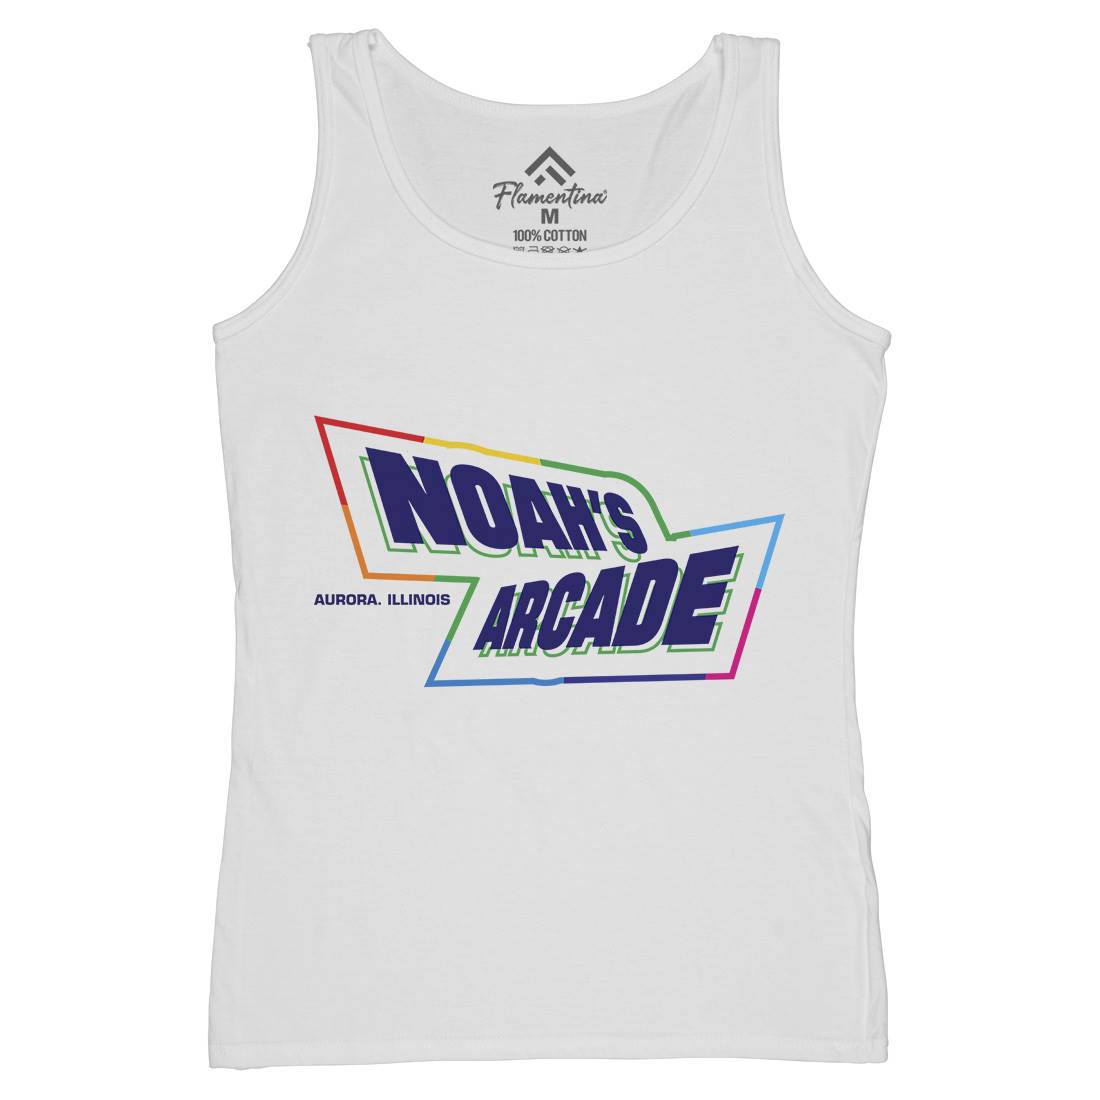 Noahs Arcade Womens Organic Tank Top Vest Retro D298